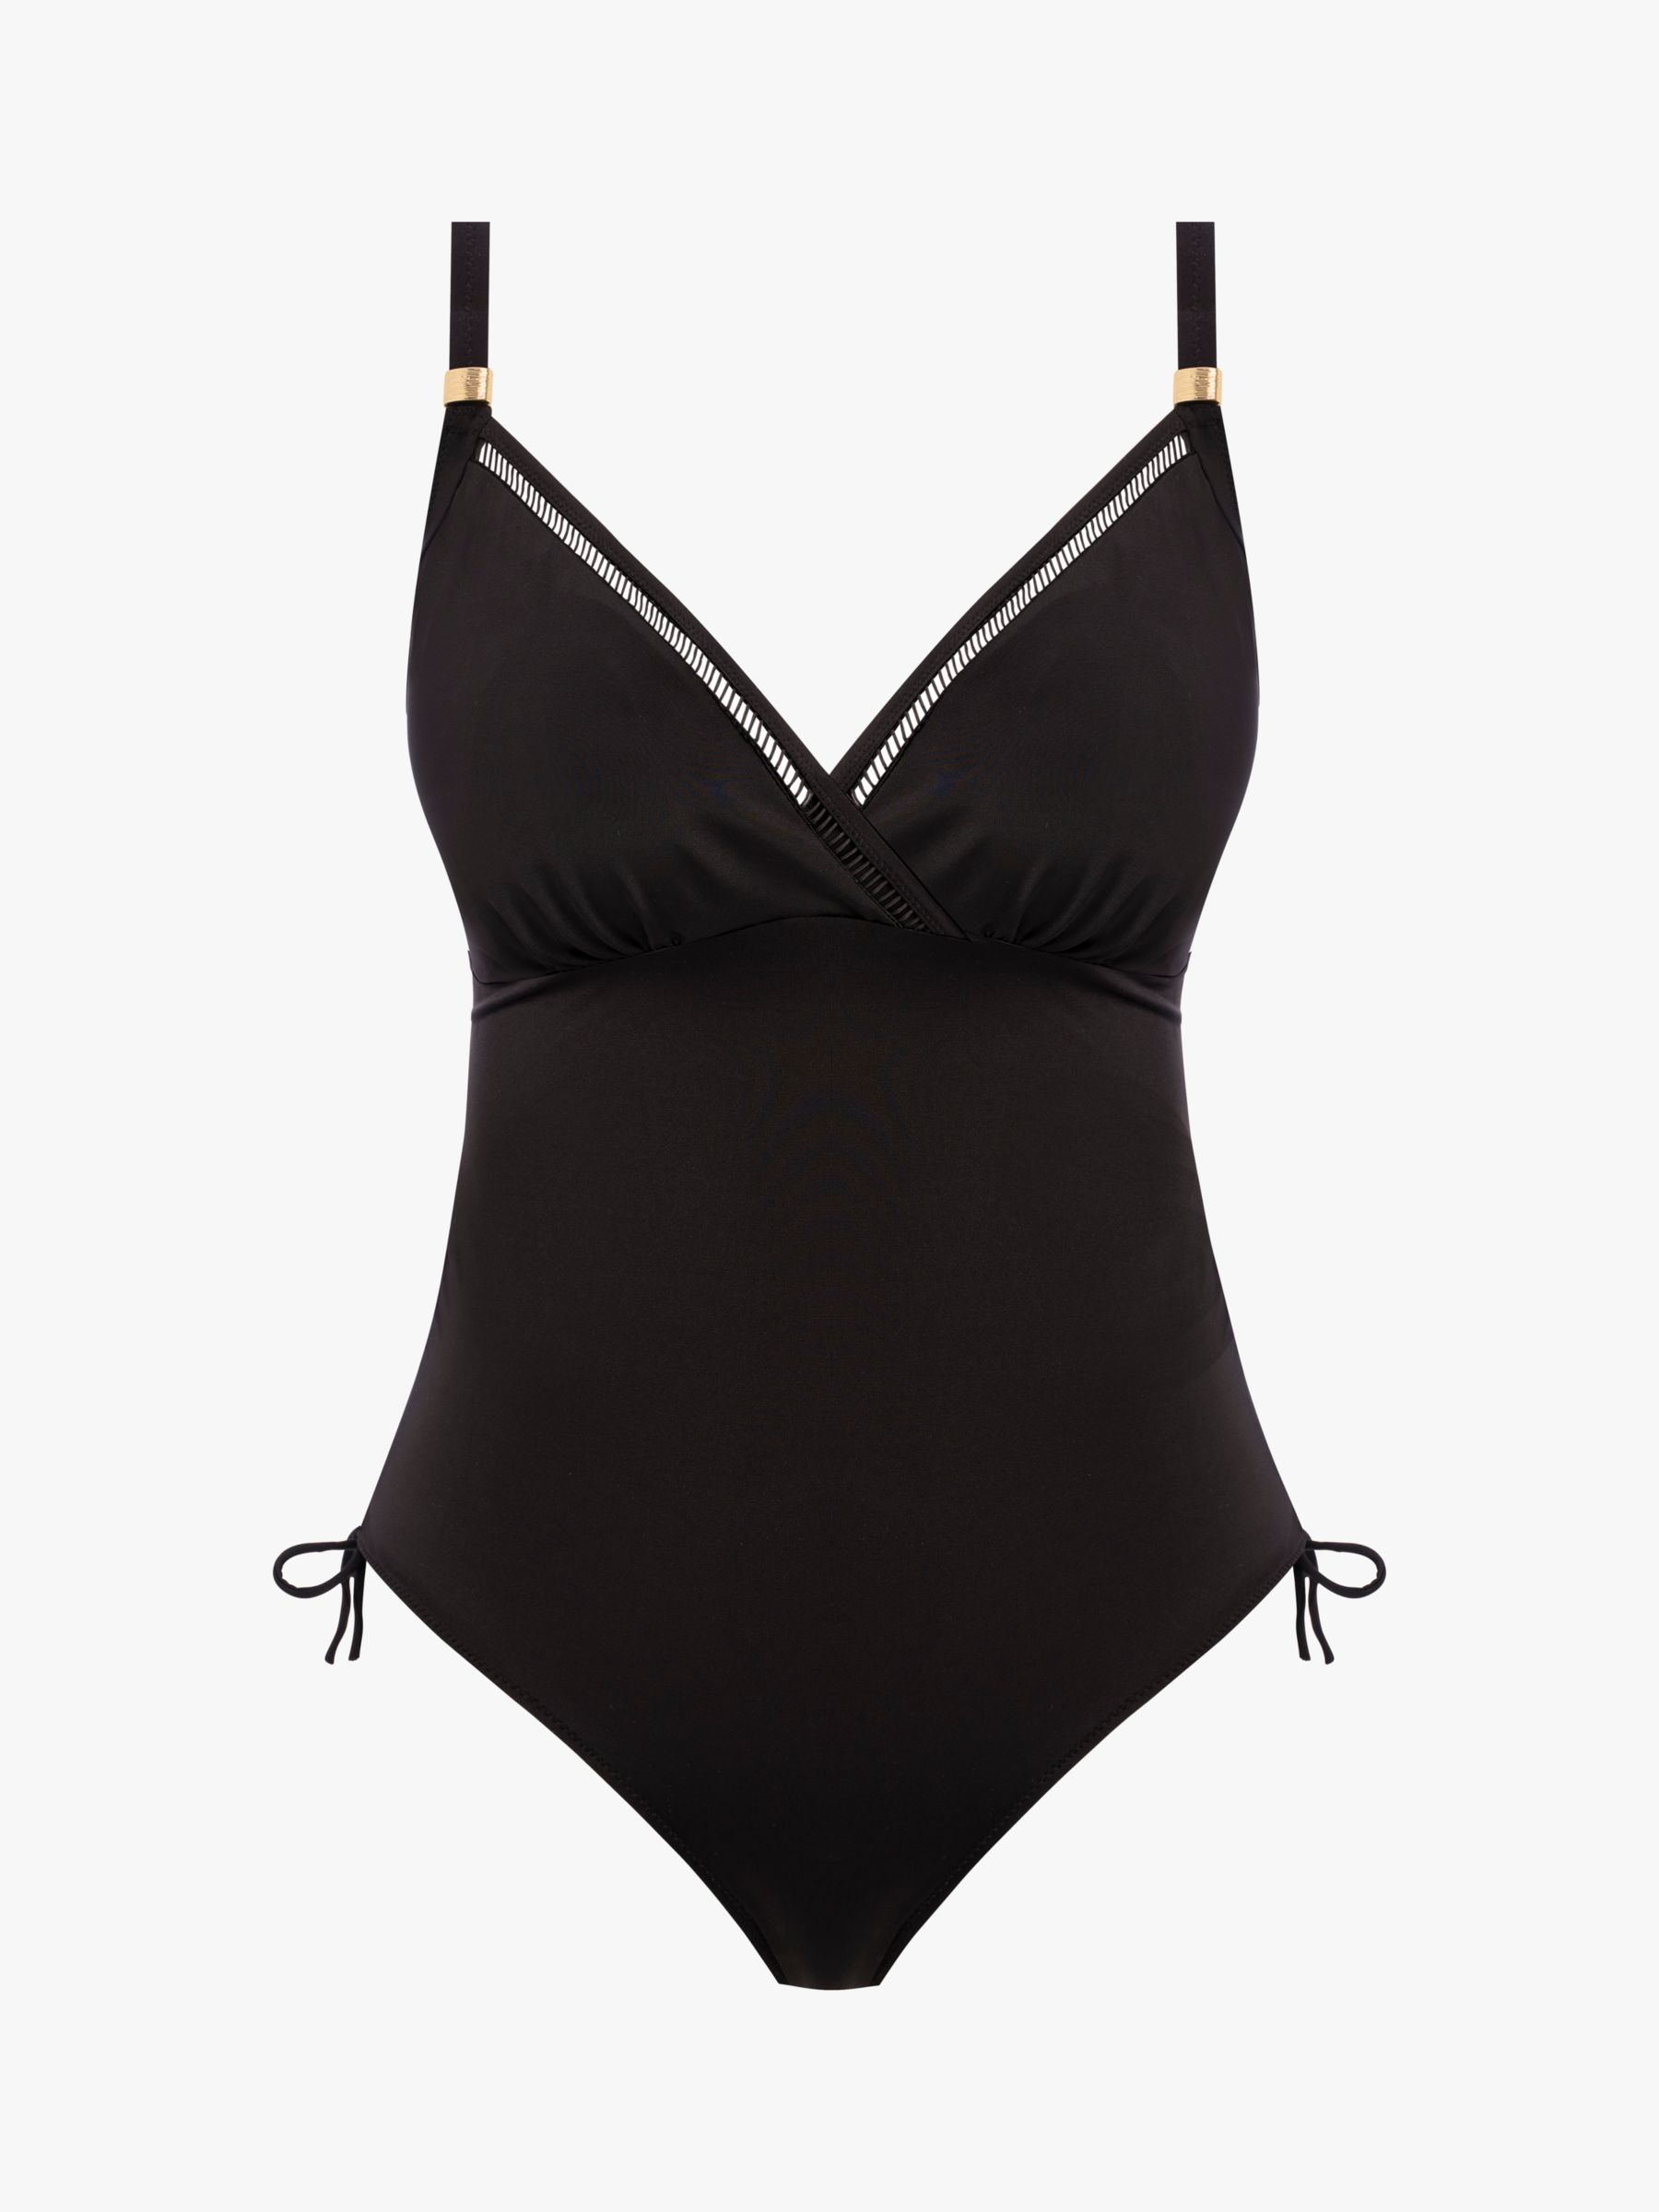 Fantasie East Hampton Underwire Swimsuit, Black, 34DD